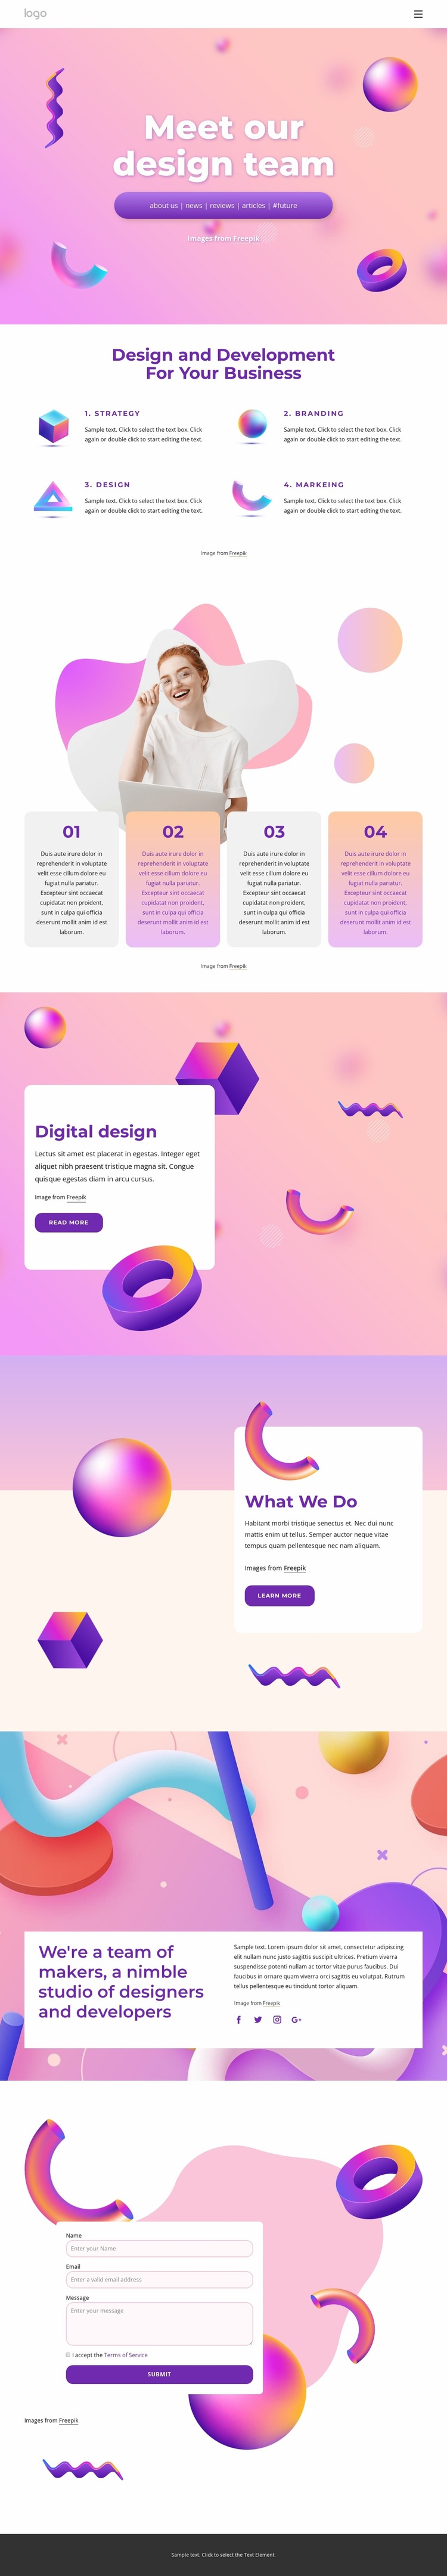 Web design and development company Website Design